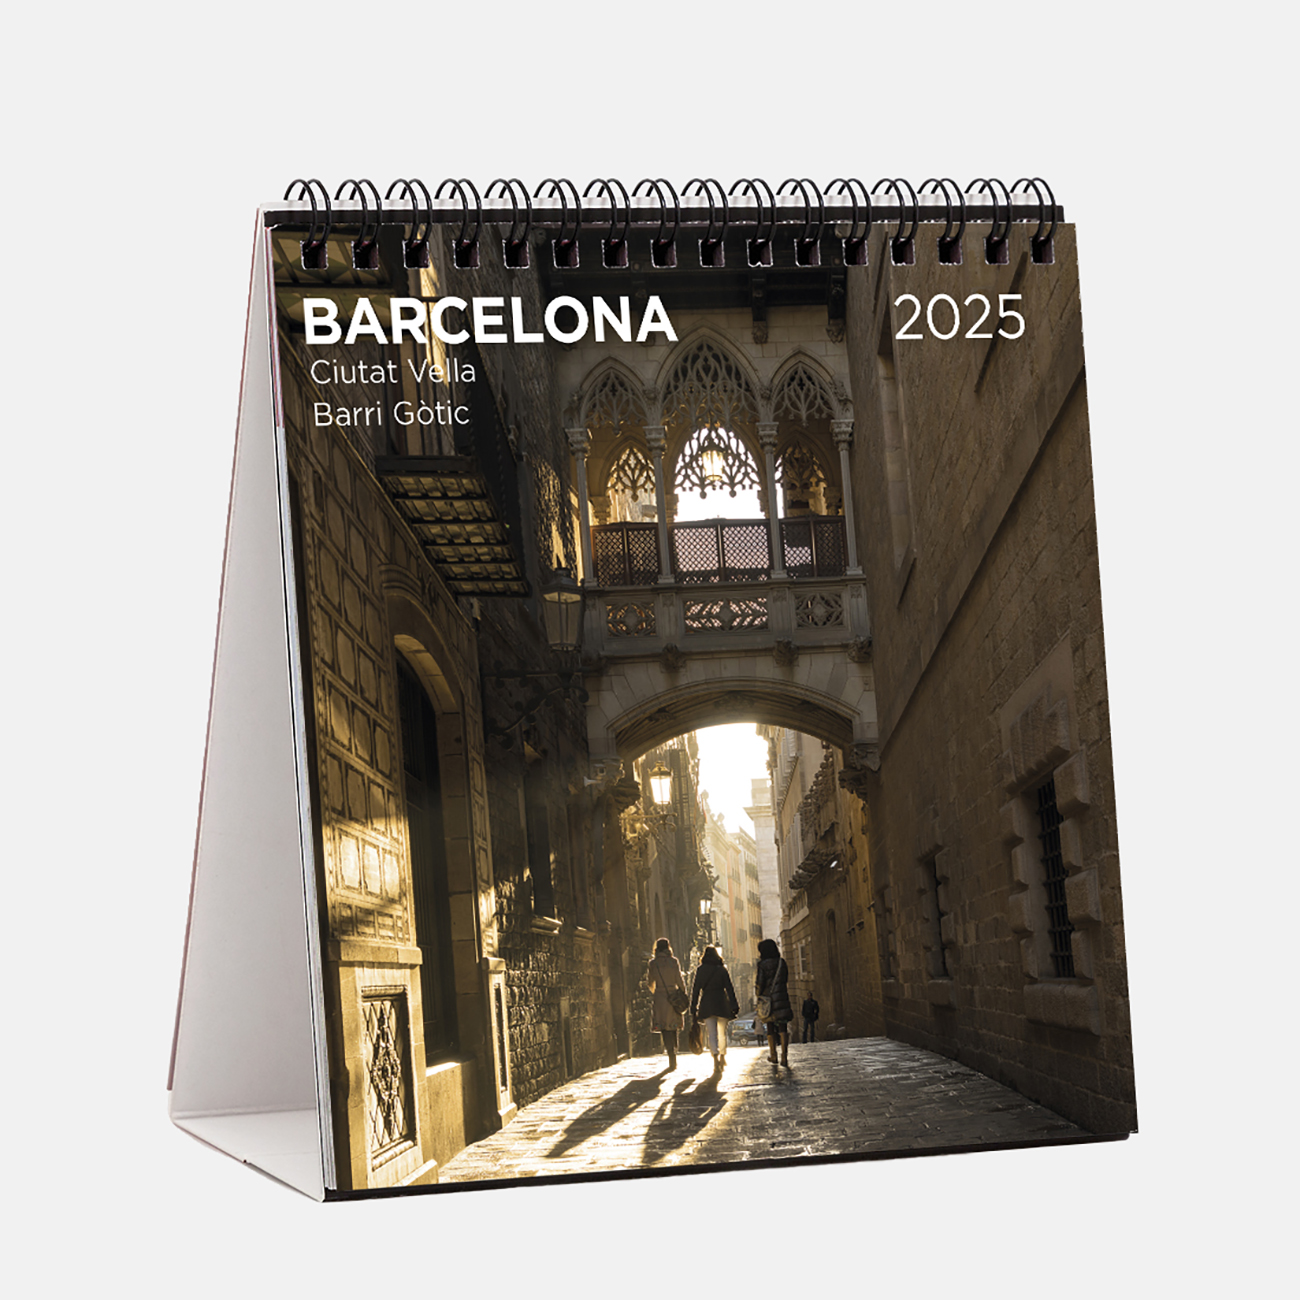 Calendrier 2025 Barcelone (Ciutat Vella) s25b2 calendario sobremesa 2025 barcelona